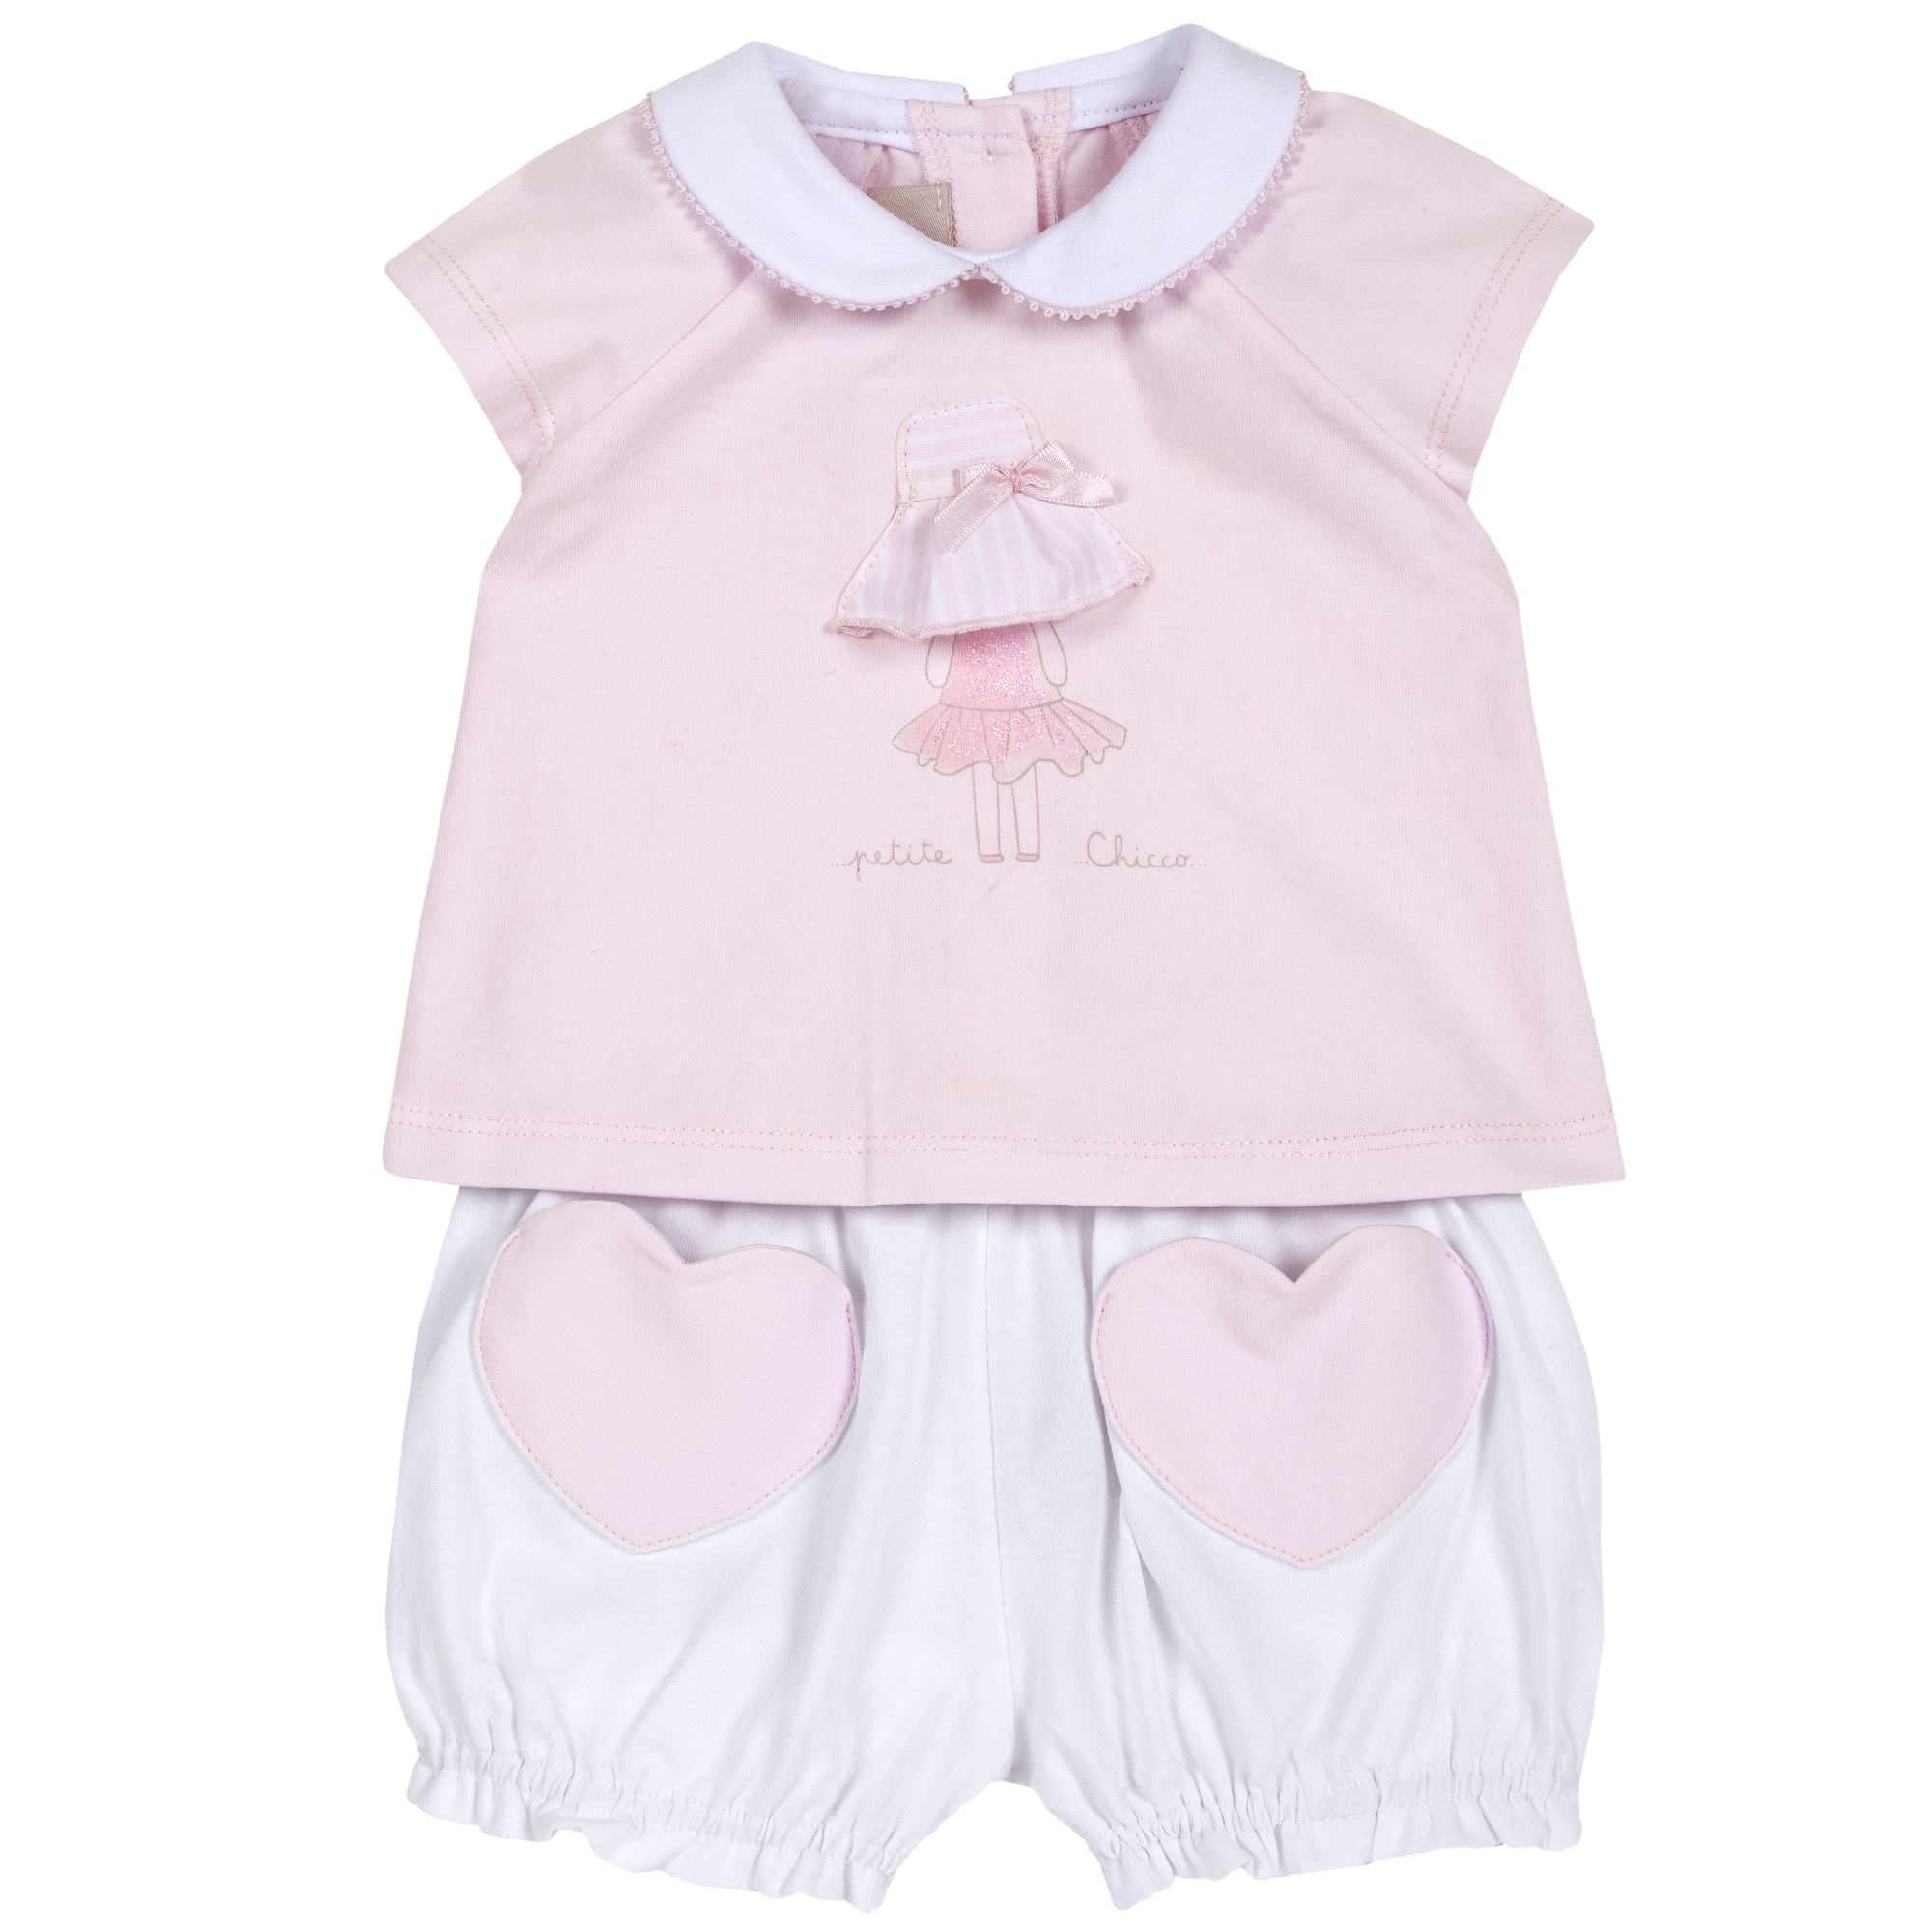 Salopeta bebe Chicco cu botosei, alb cu roz, 76427